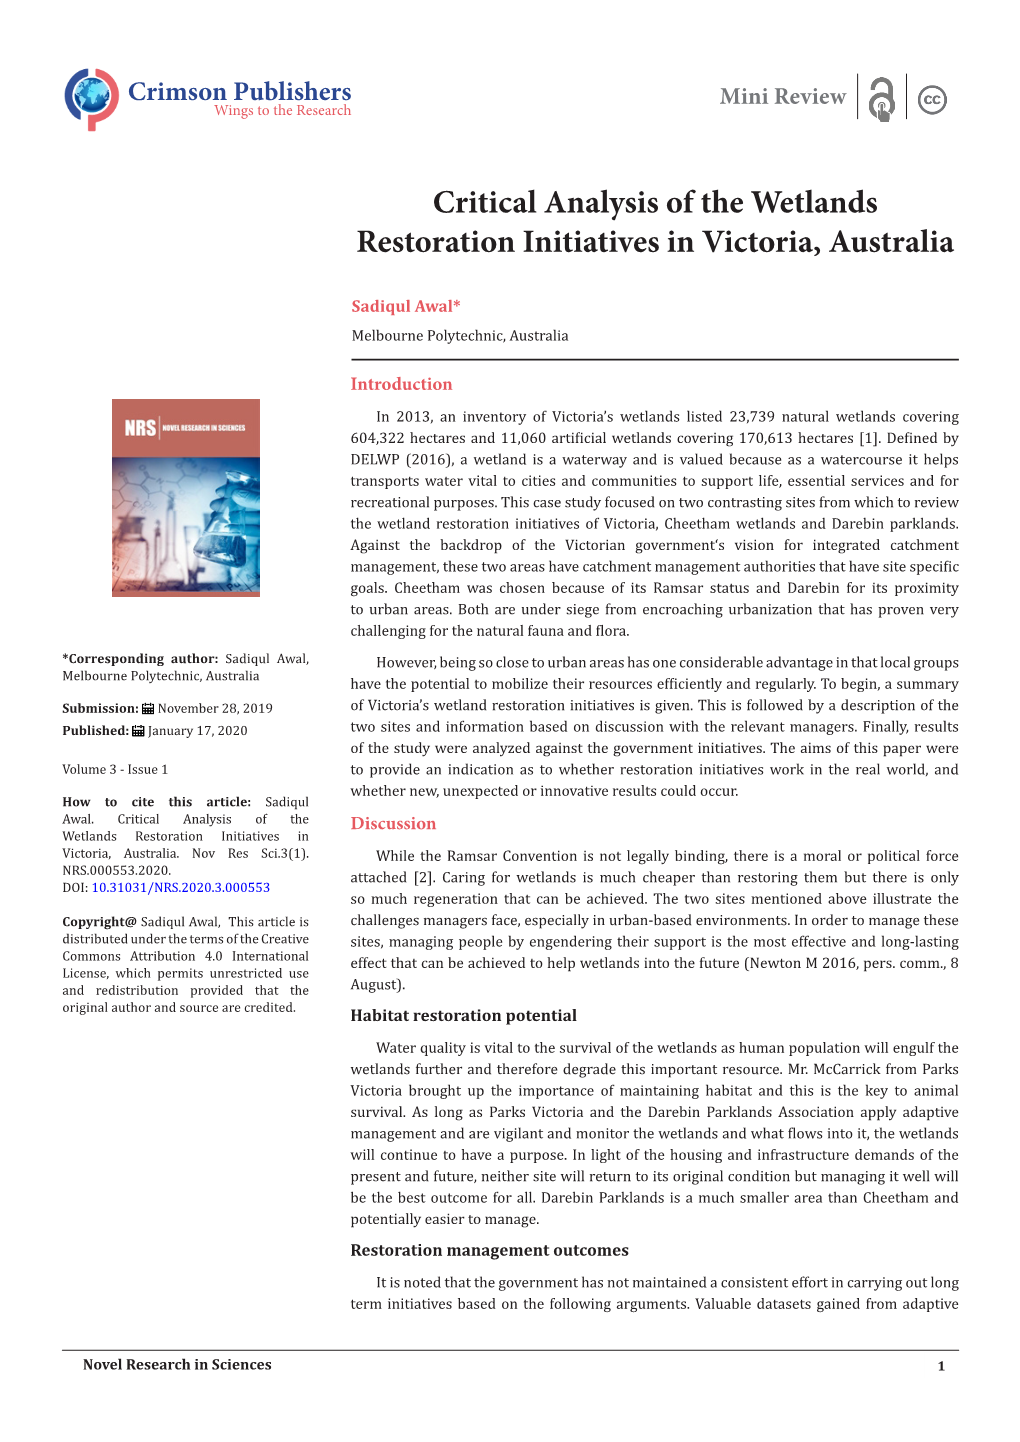 Critical Analysis of the Wetlands Restoration Initiatives in Victoria, Australia